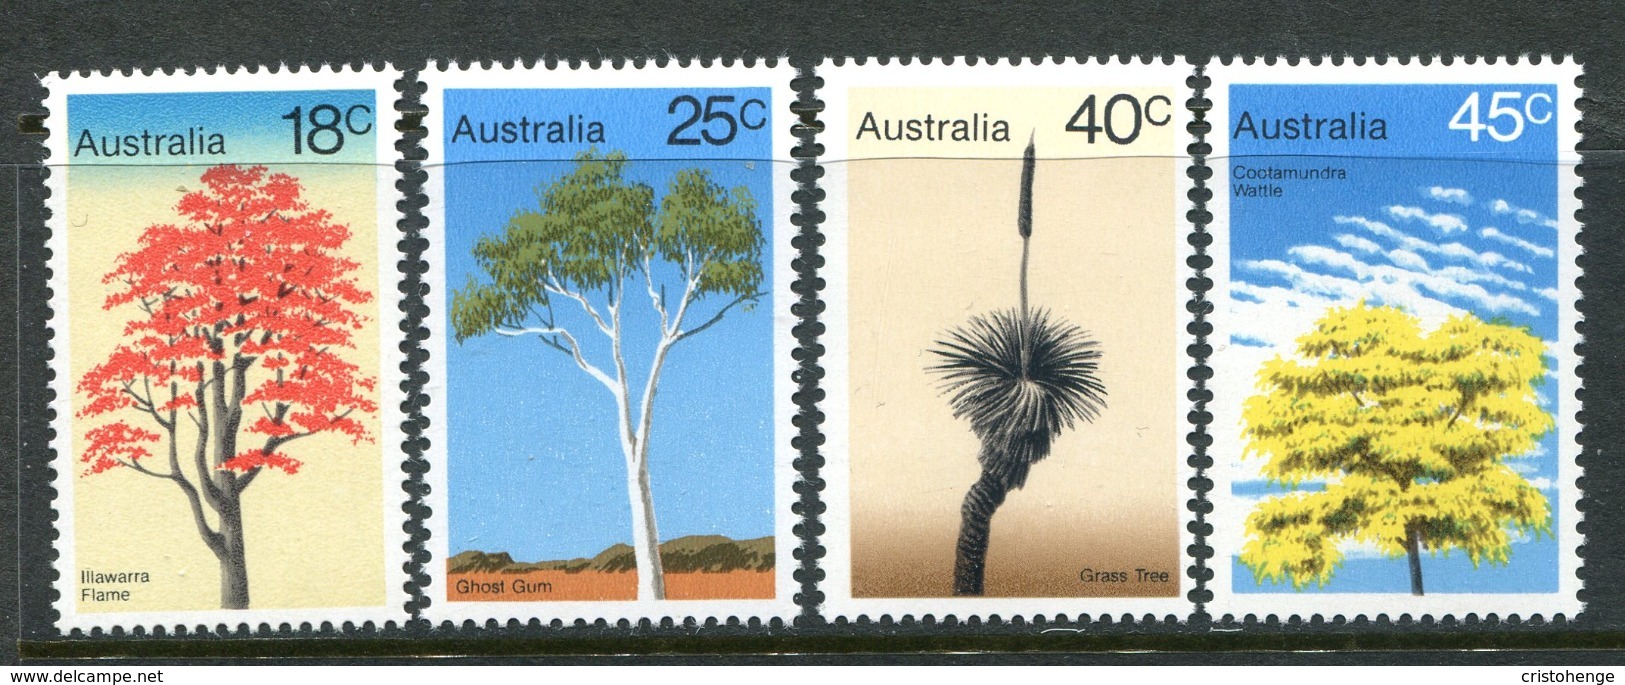 Australia 1978 Trees Set MNH (SG 664-667) - Mint Stamps